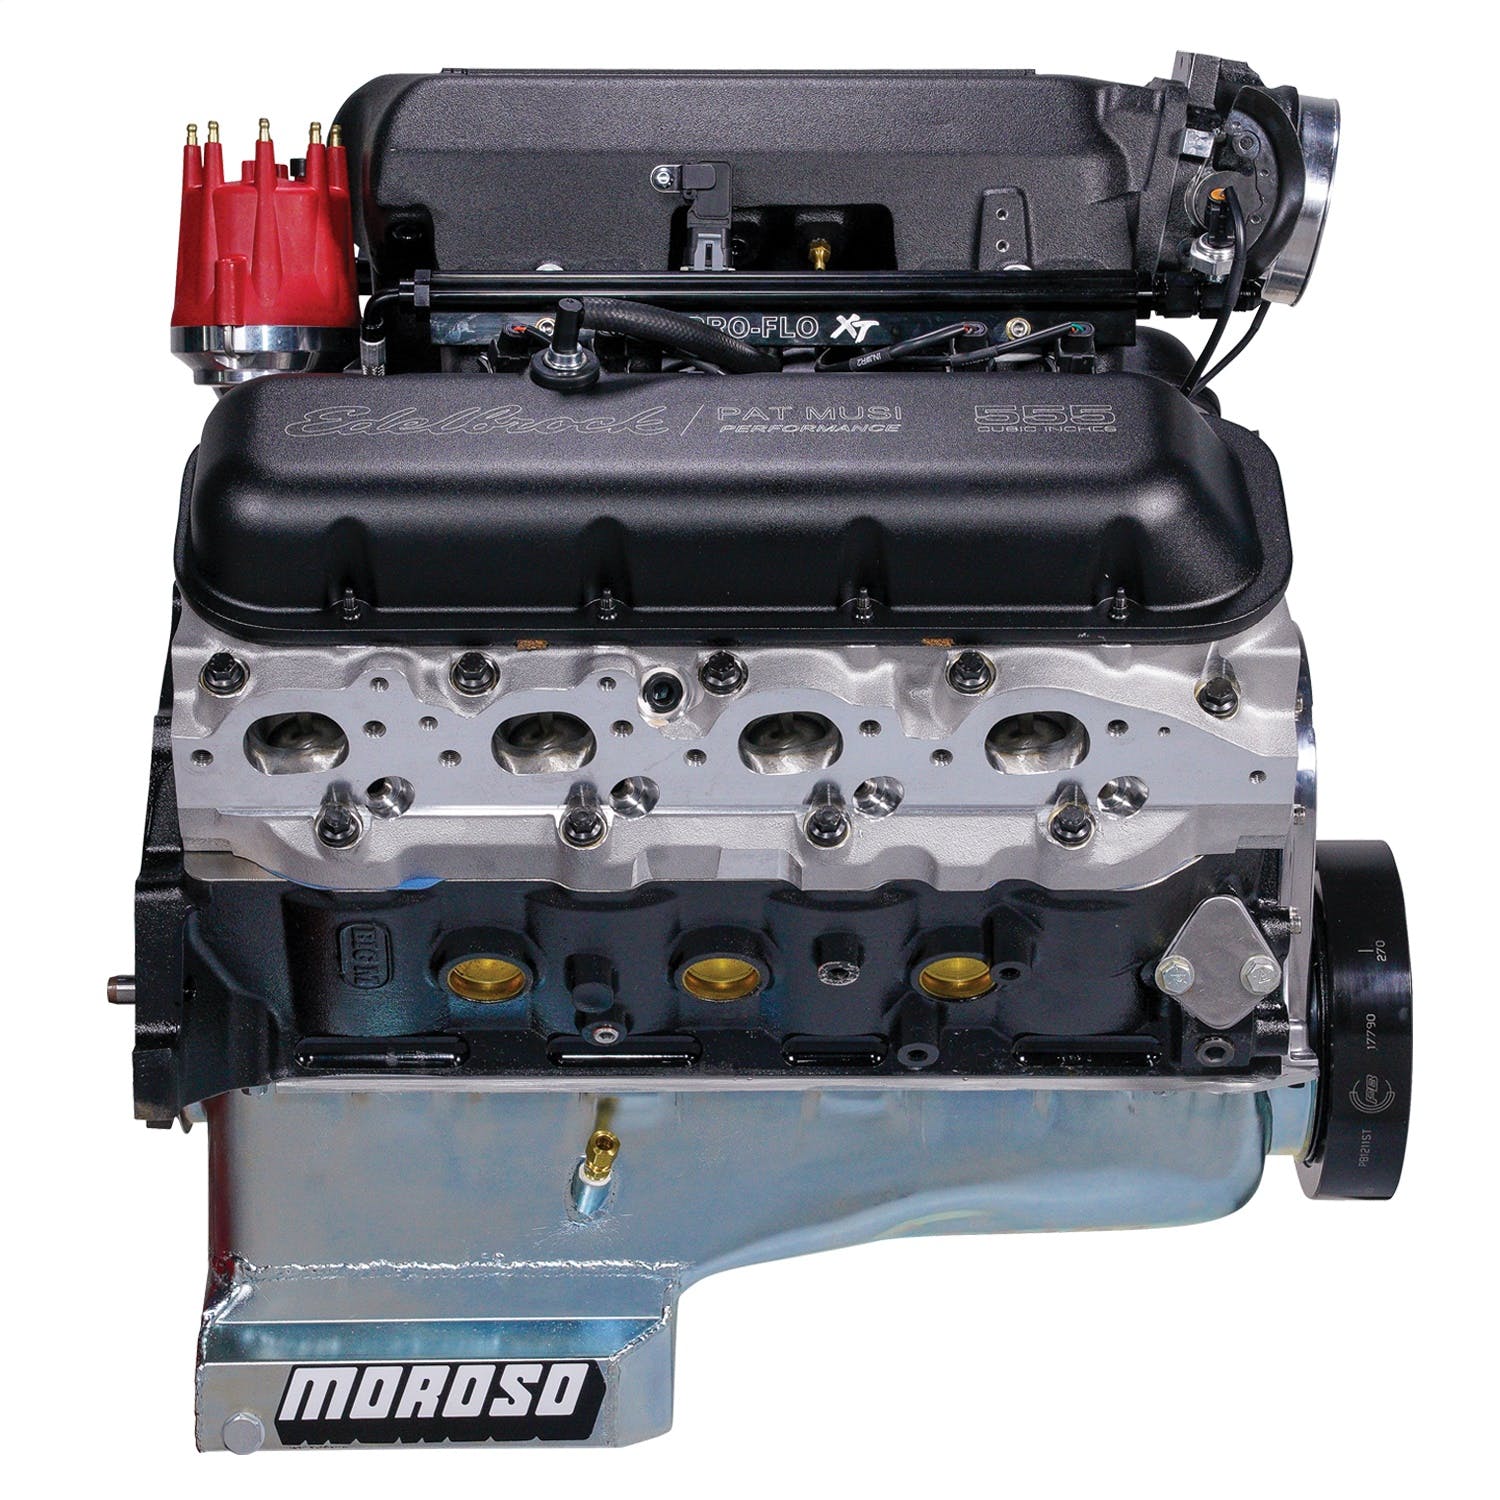 Edelbrock 49557 Edelbrock/Musi 555 Pro-Flo 4 XT EFI Big-Block Chevy Crate Engine